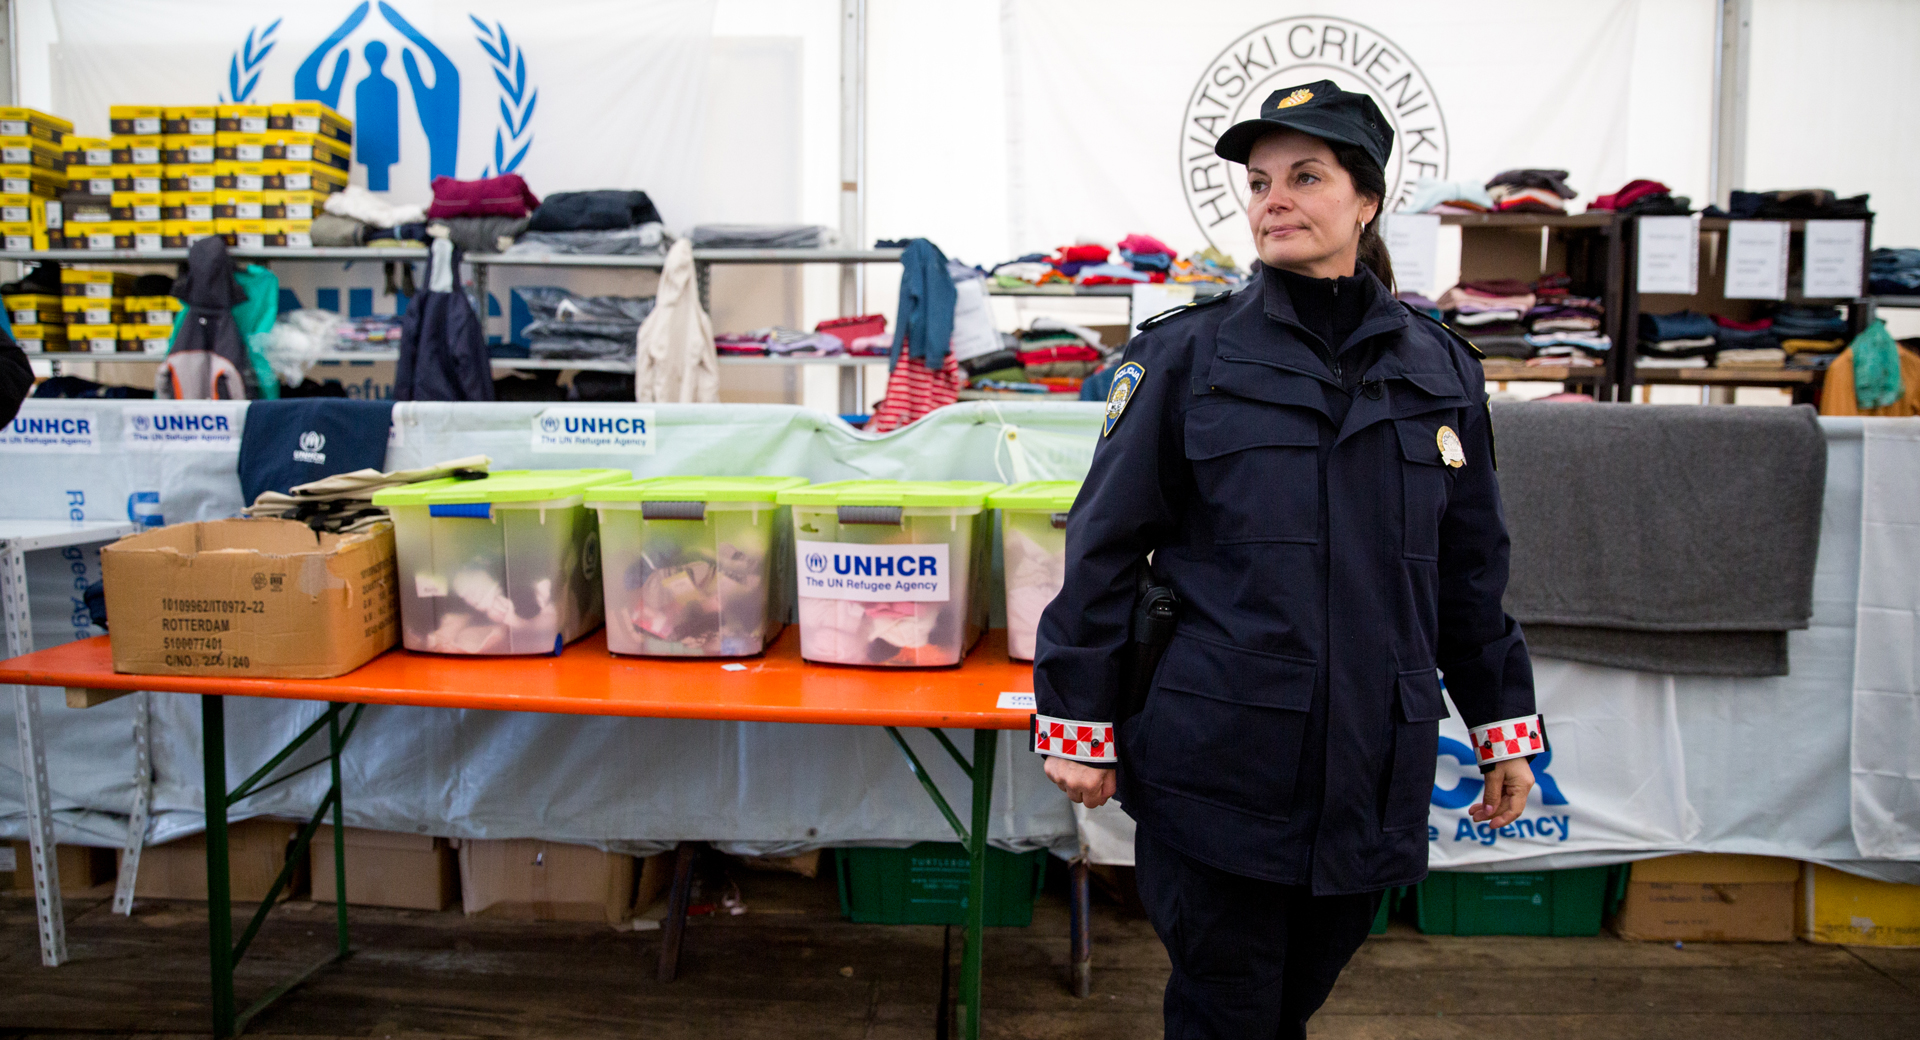 Kata Nujić, police spokesperson for the Slavonski Brod refugee camp. (Photo by Courtney Pedroza)